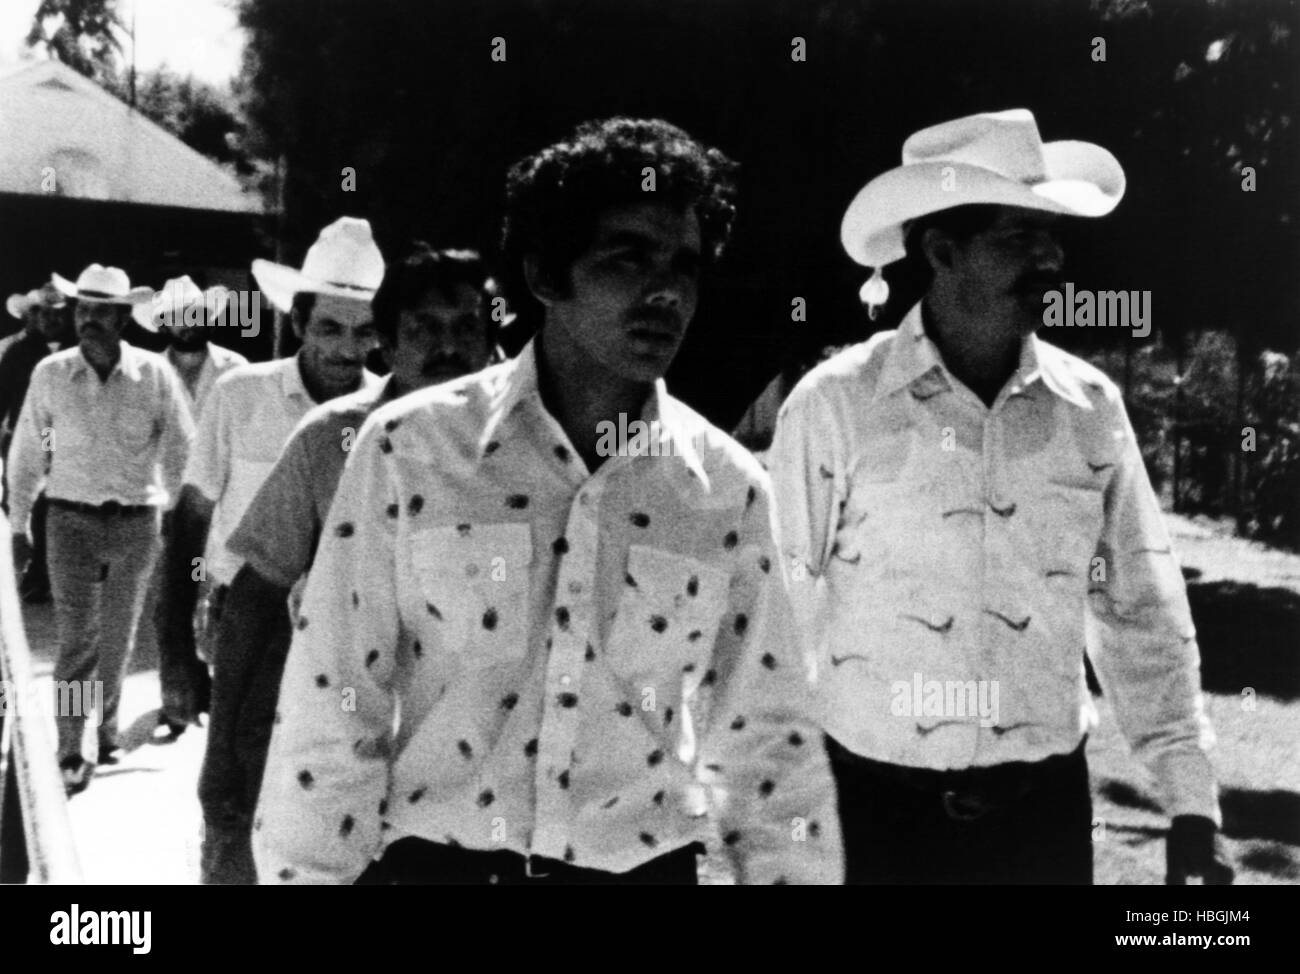 ALAMBRISTA!, Domingo Ambriz, 1977 Stock Photo